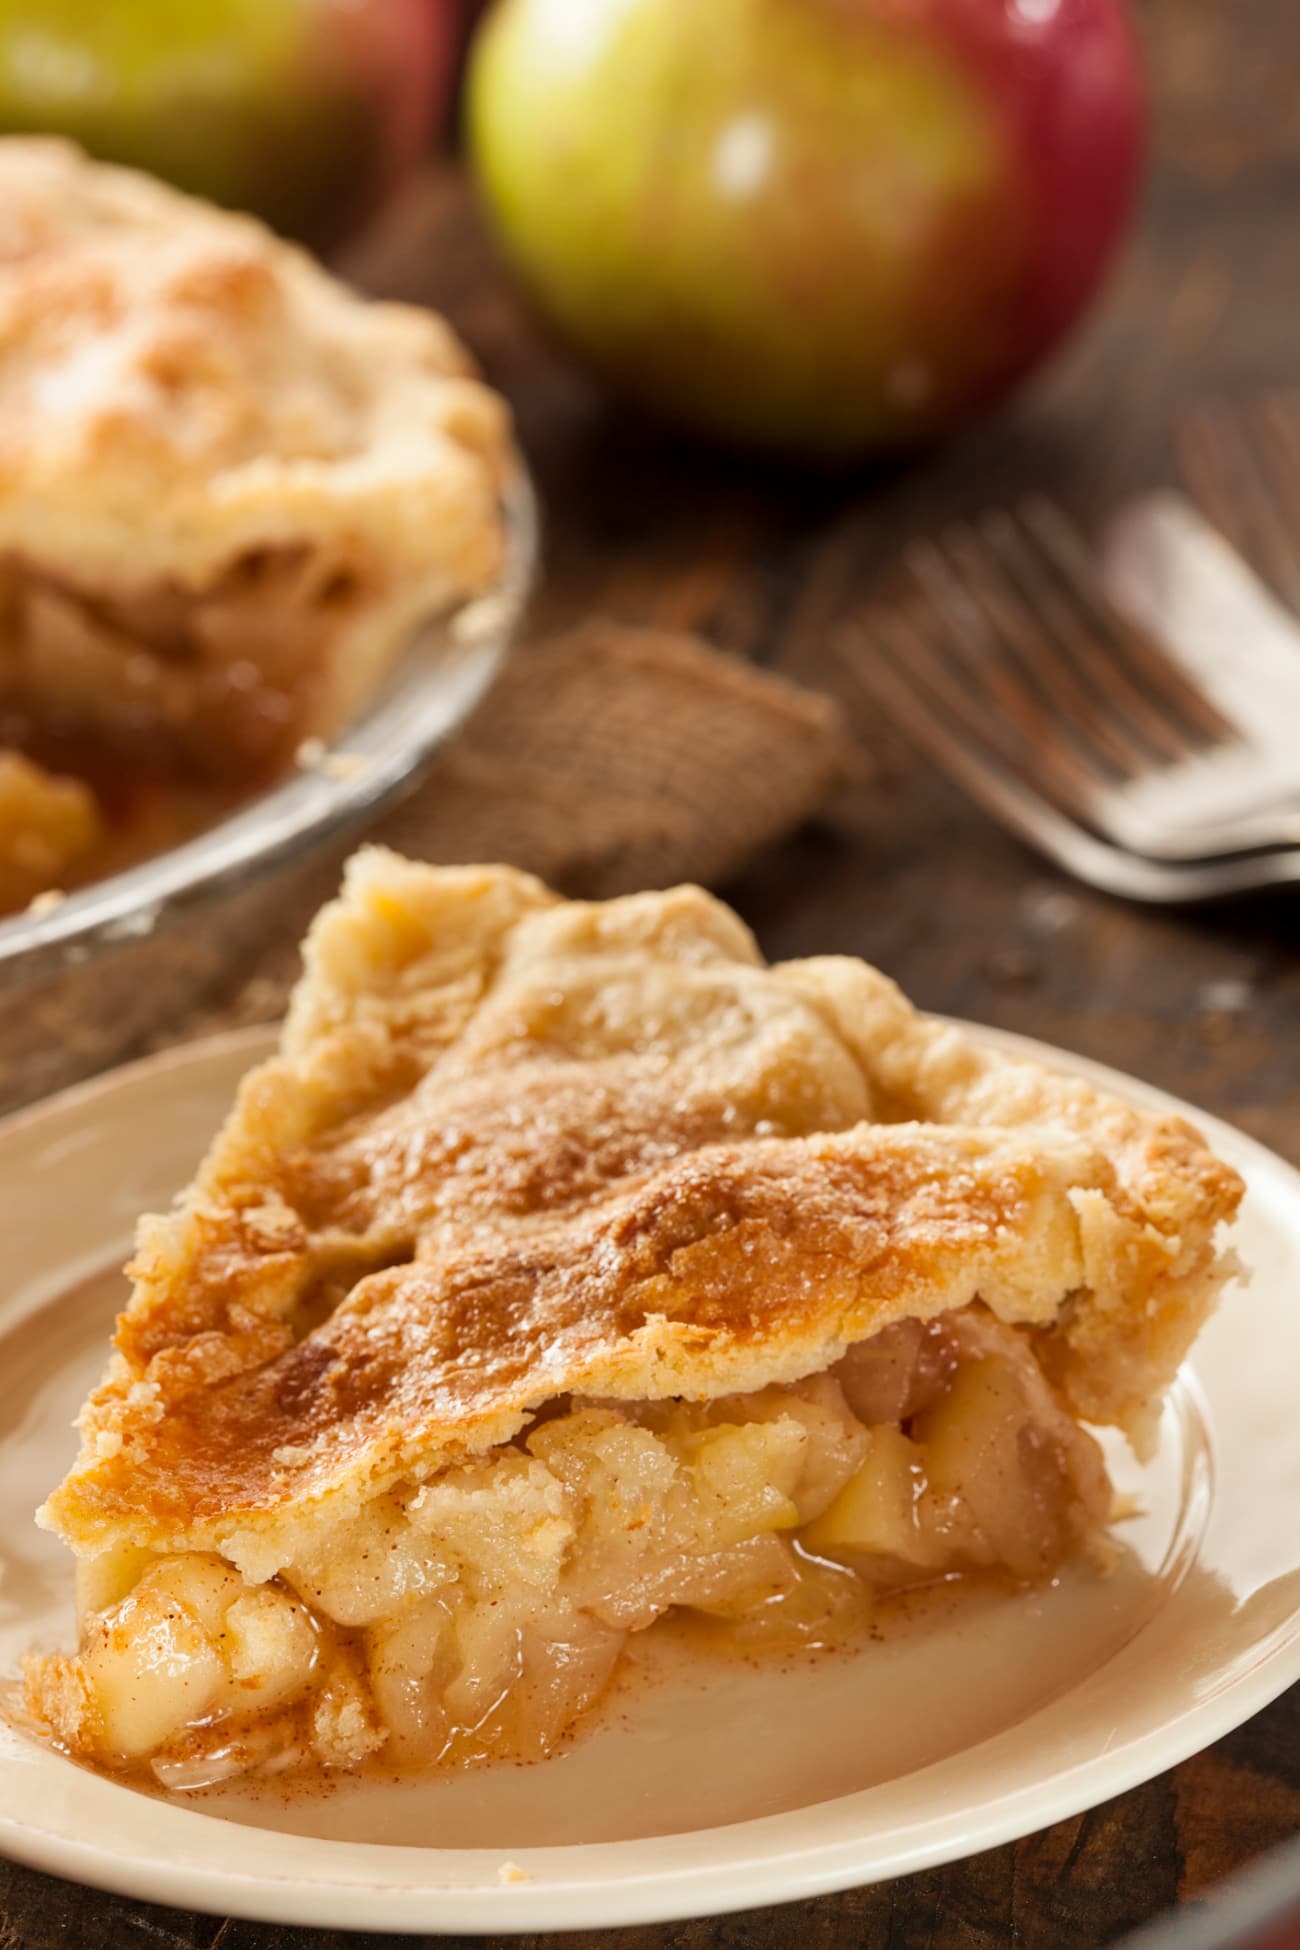 Best ever apple pie